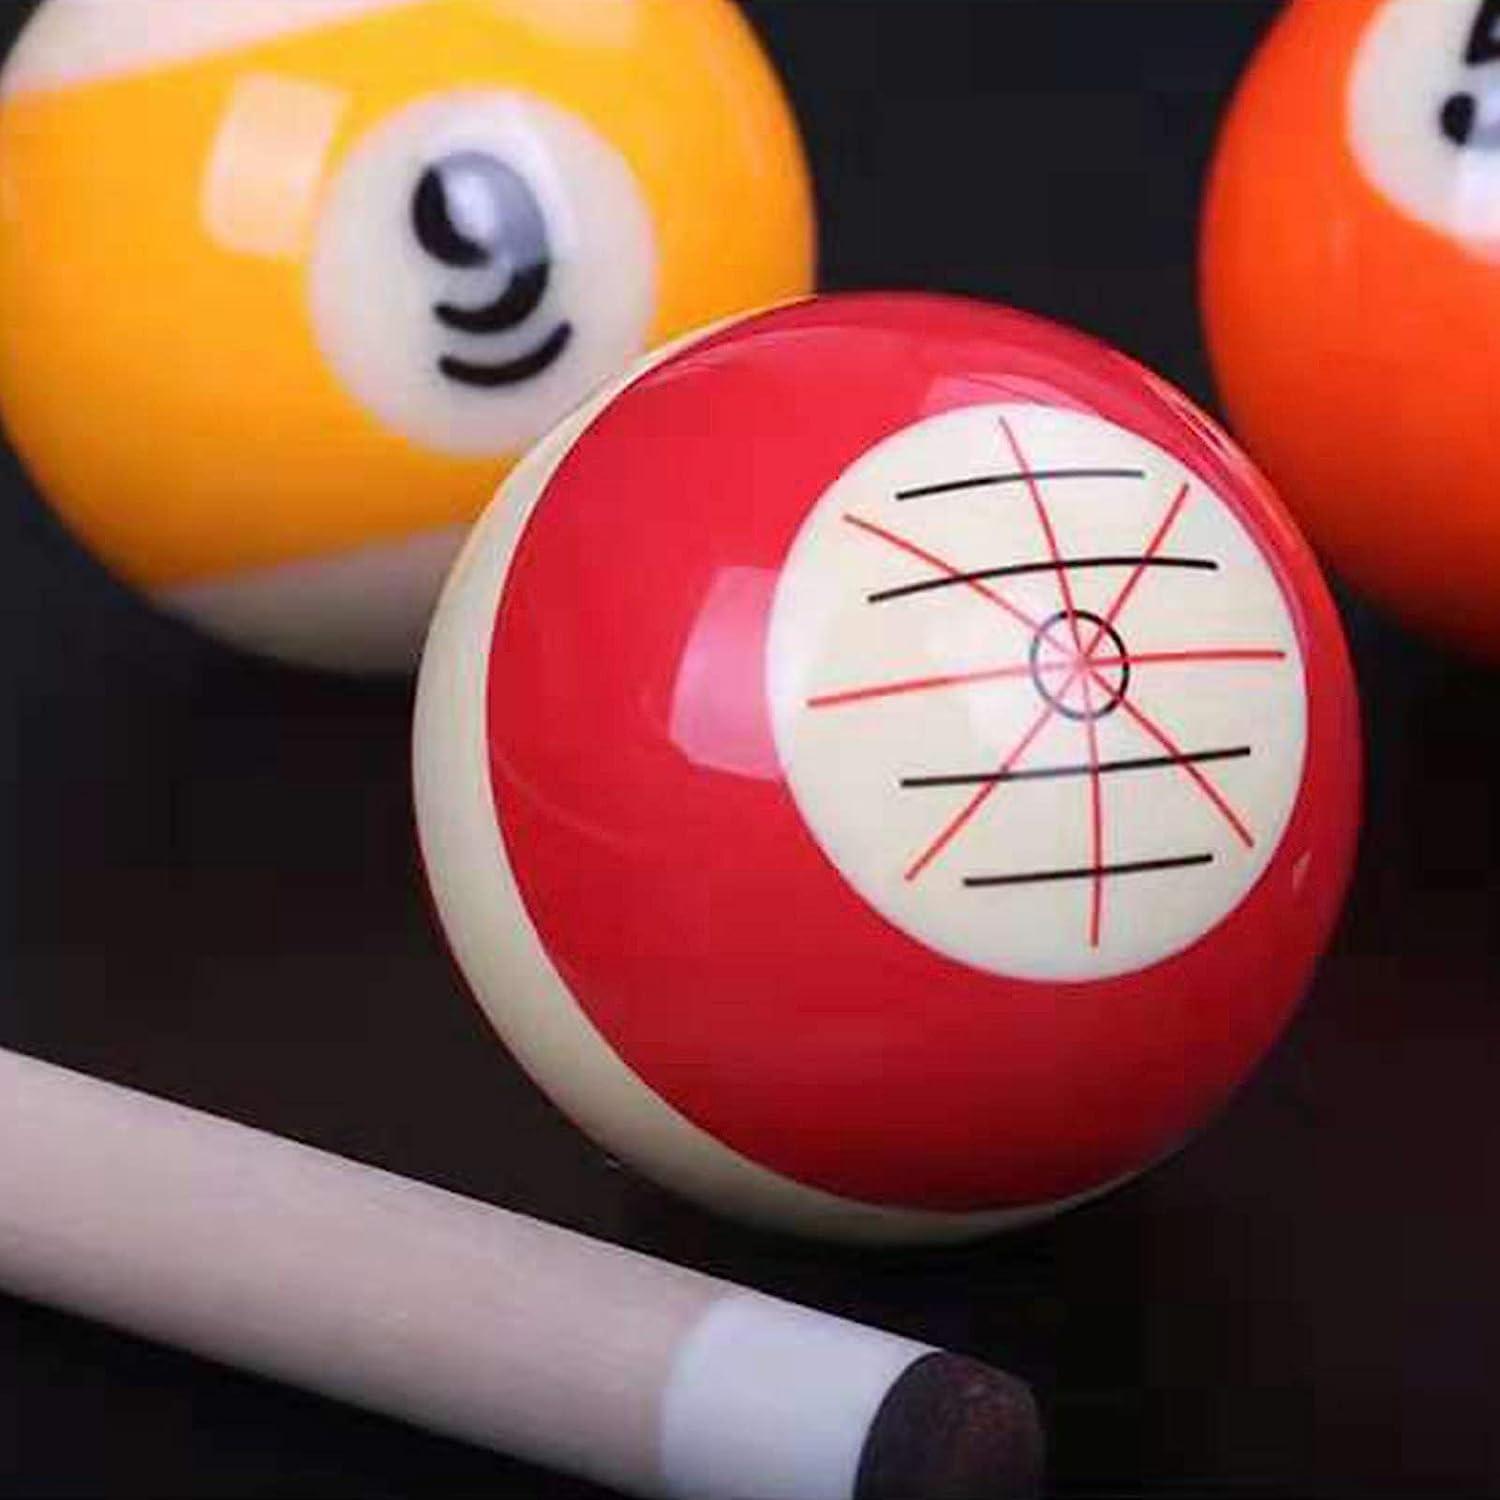 Billiards Cue Ball Practice Entraînement Artifact Balles d